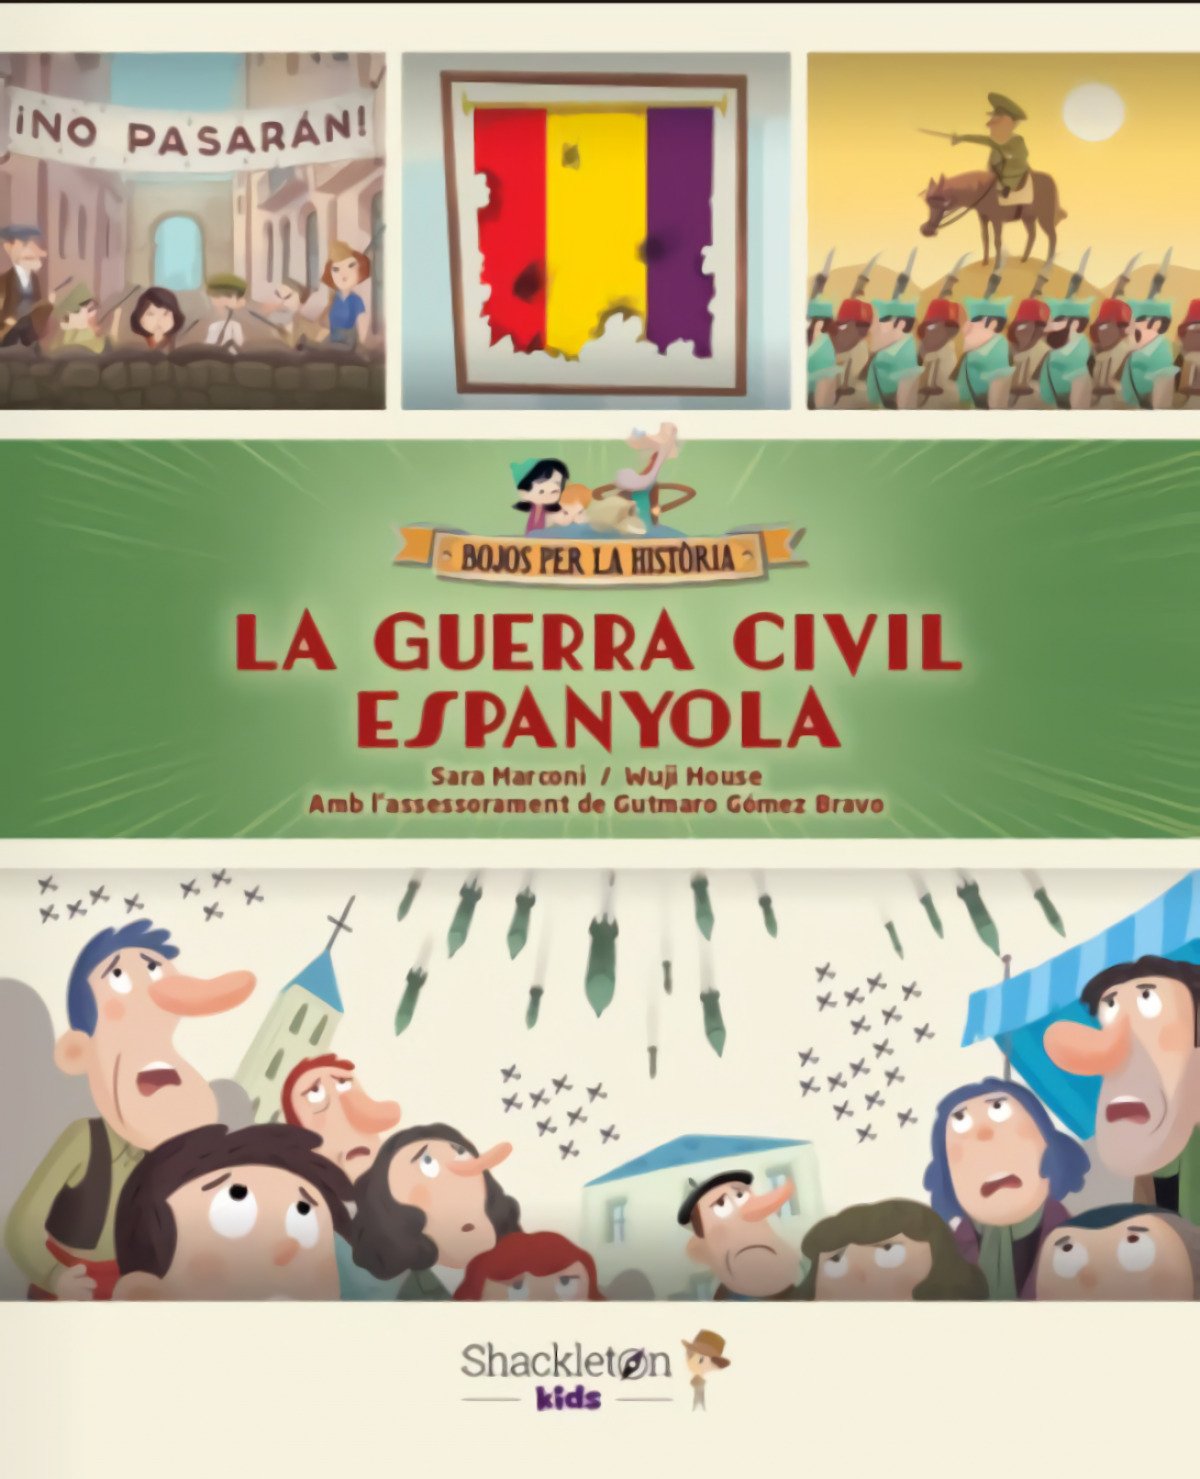 La Guerra Civil Espanyola